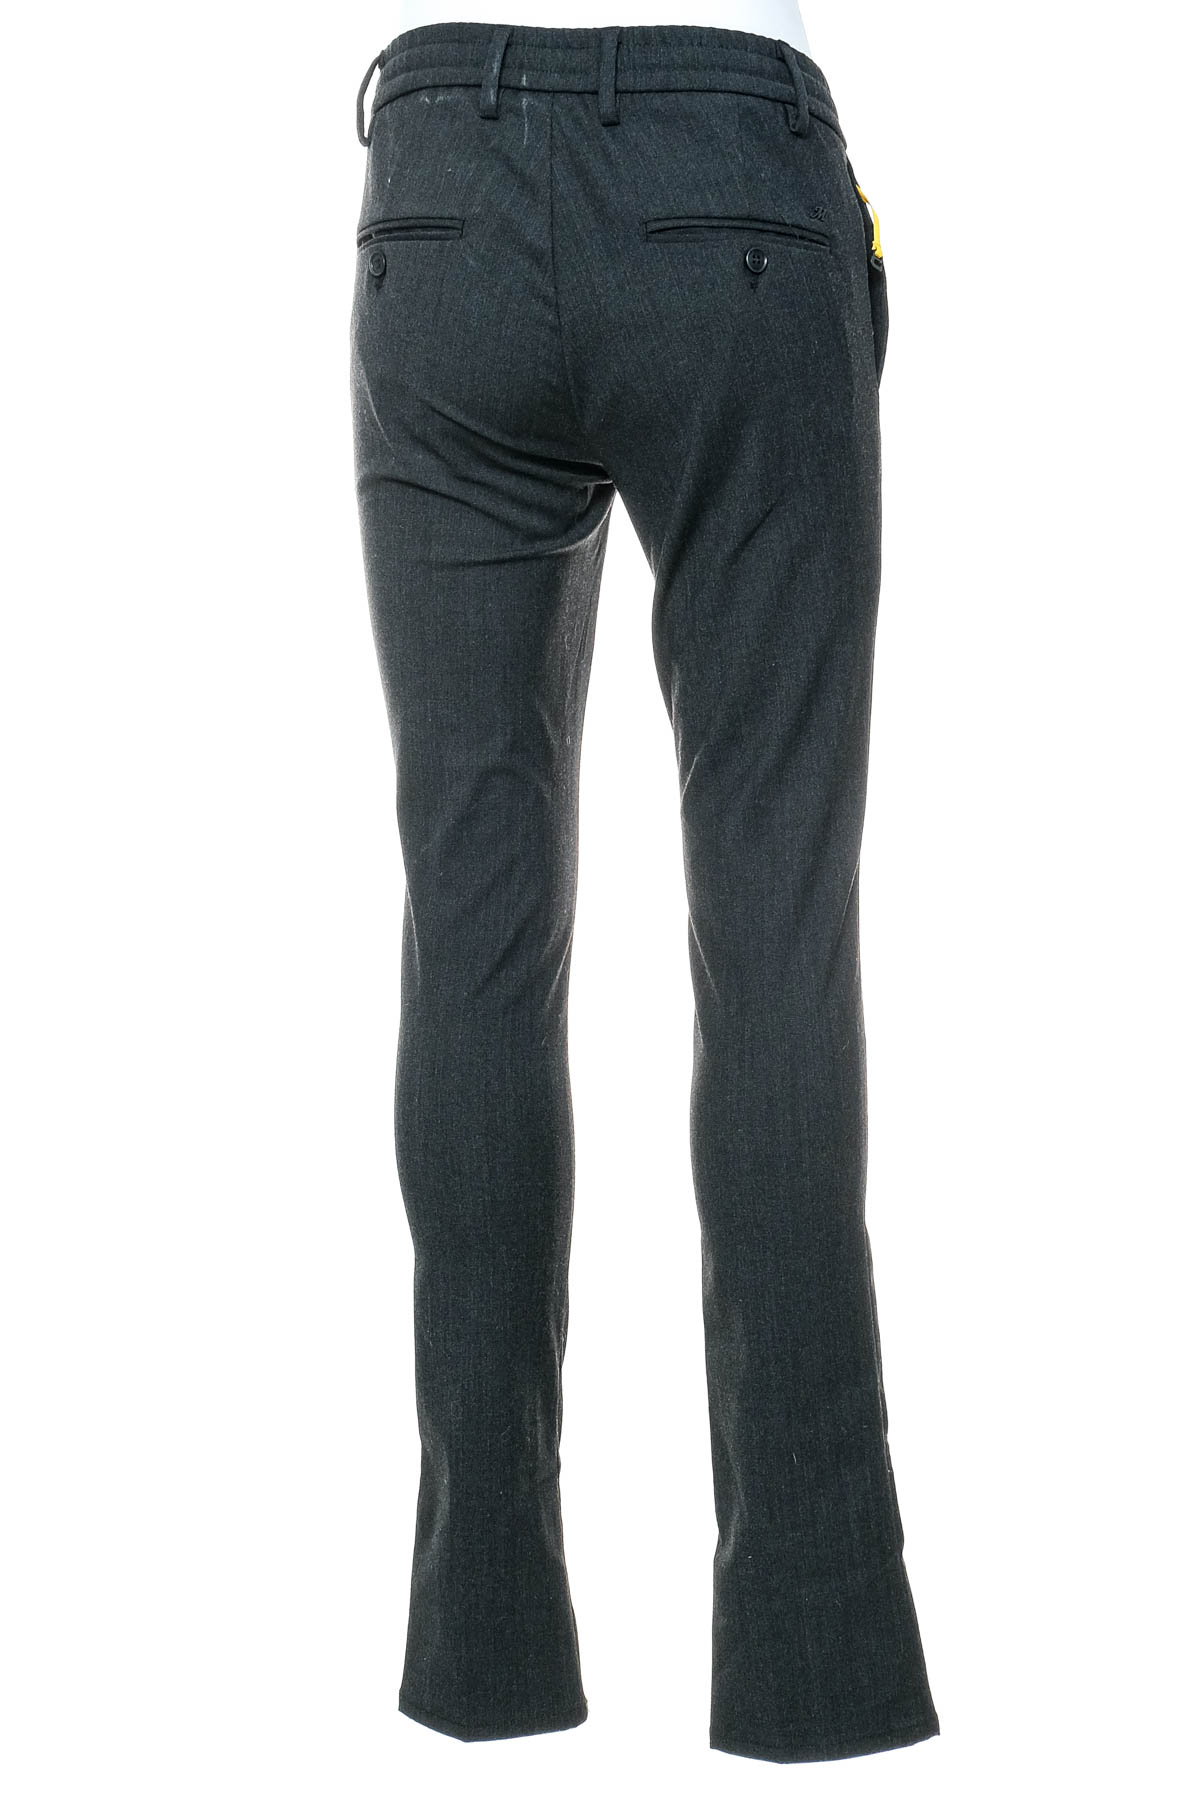 Men's trousers - Mason's - 1